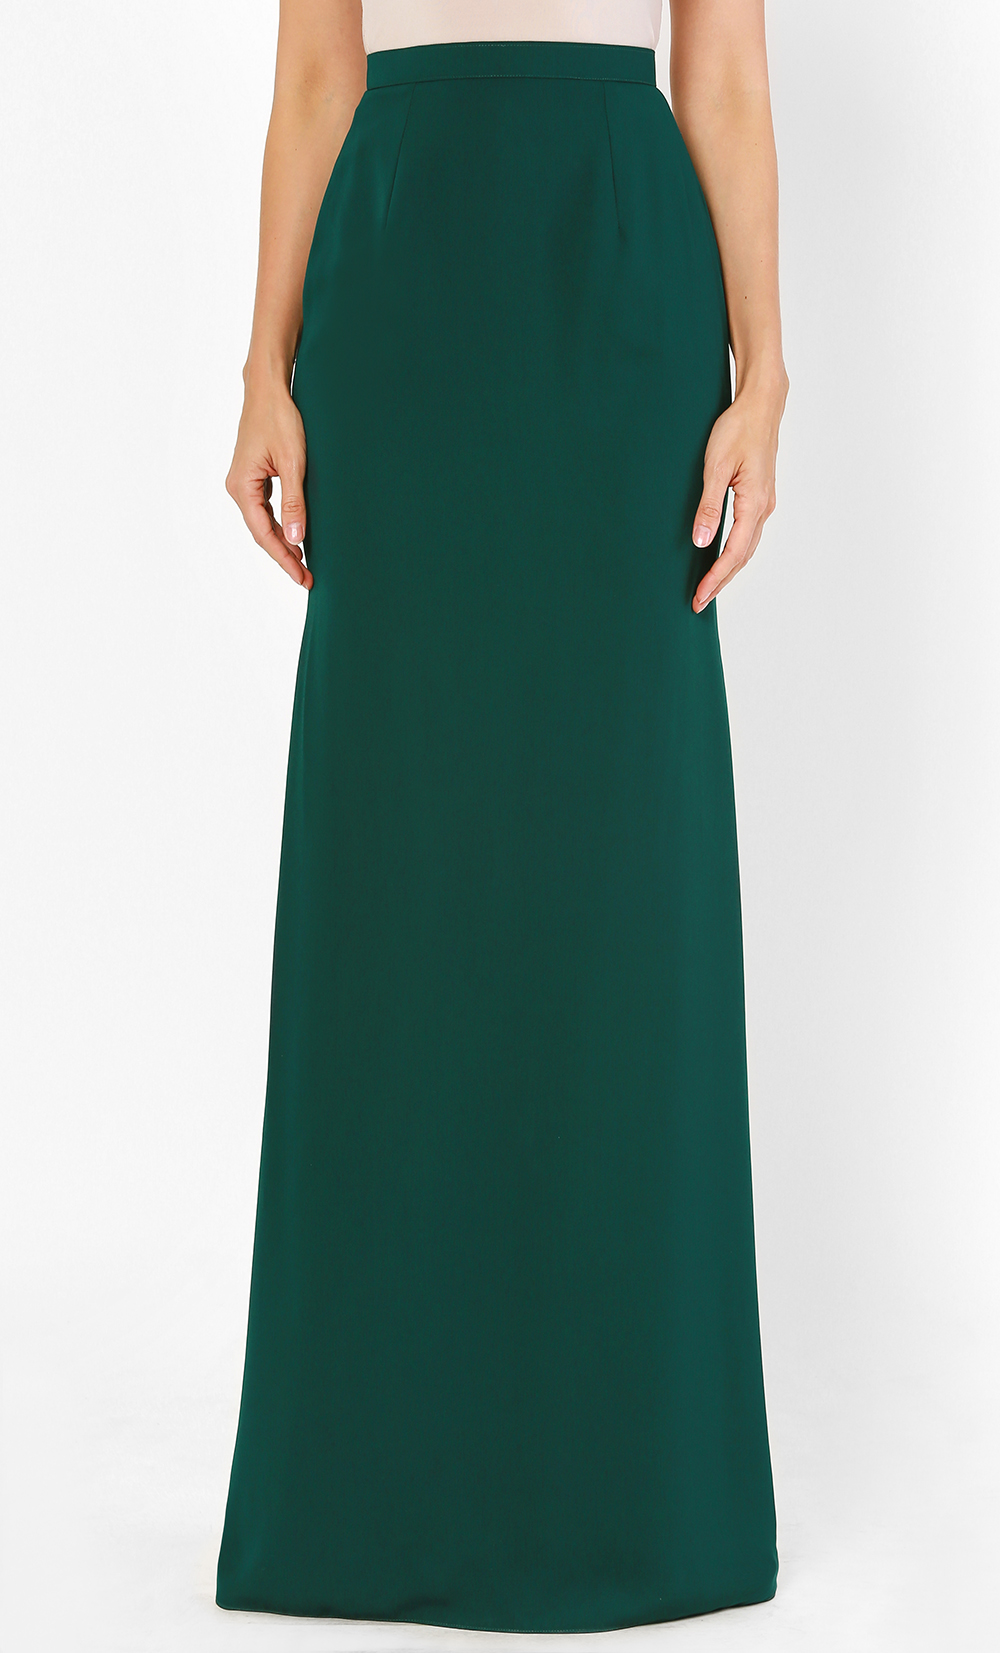 Nigella Kebaya Set in Emerald Green | FashionValet